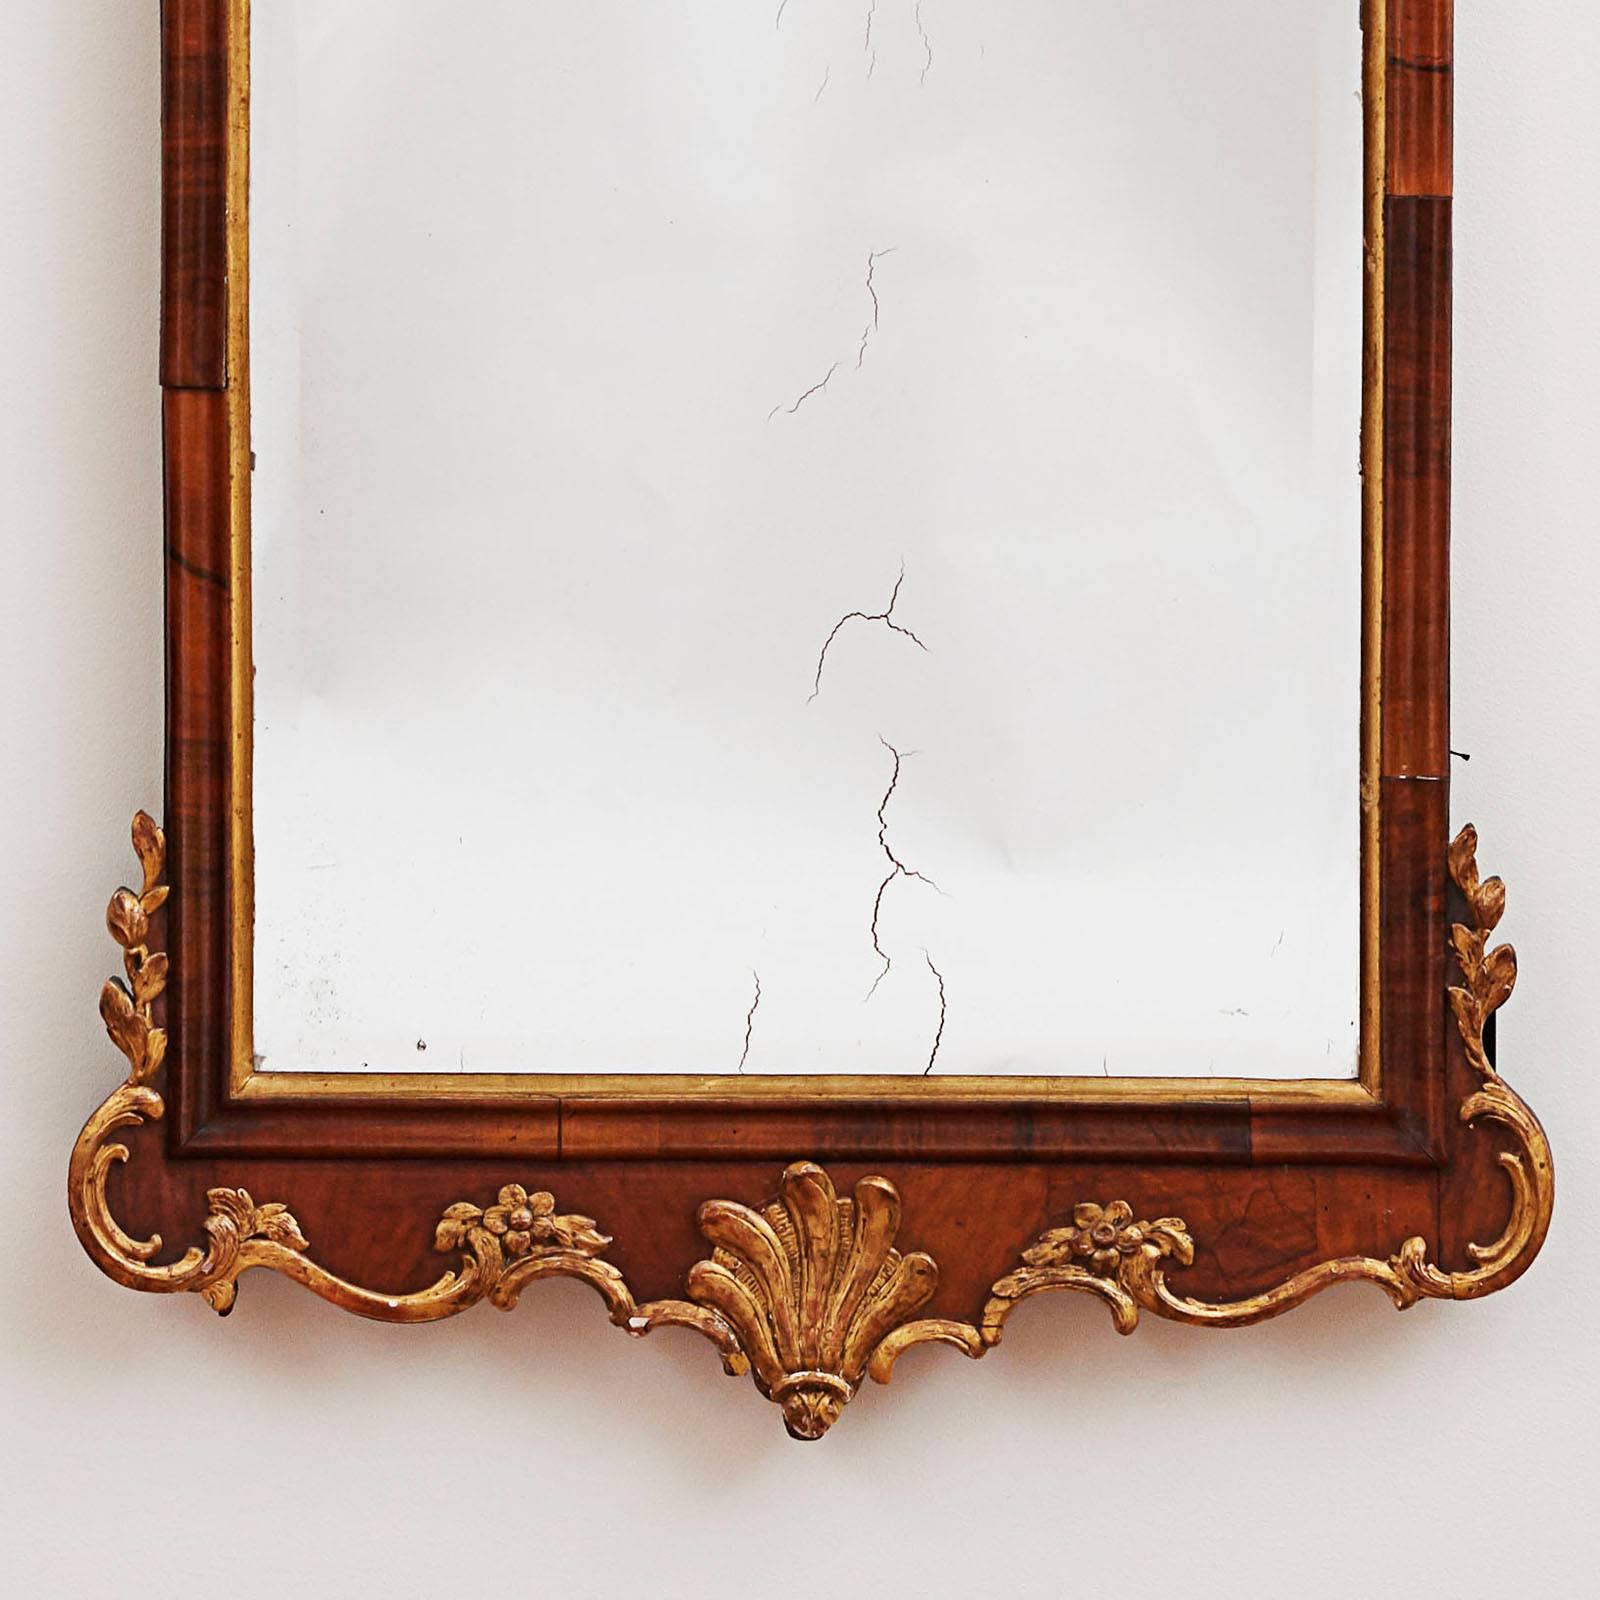 George II mirror.
Walnut, gilded wood carvings.
Original mirror. Mirror with a beautiful original patina
England, 1720-1730.